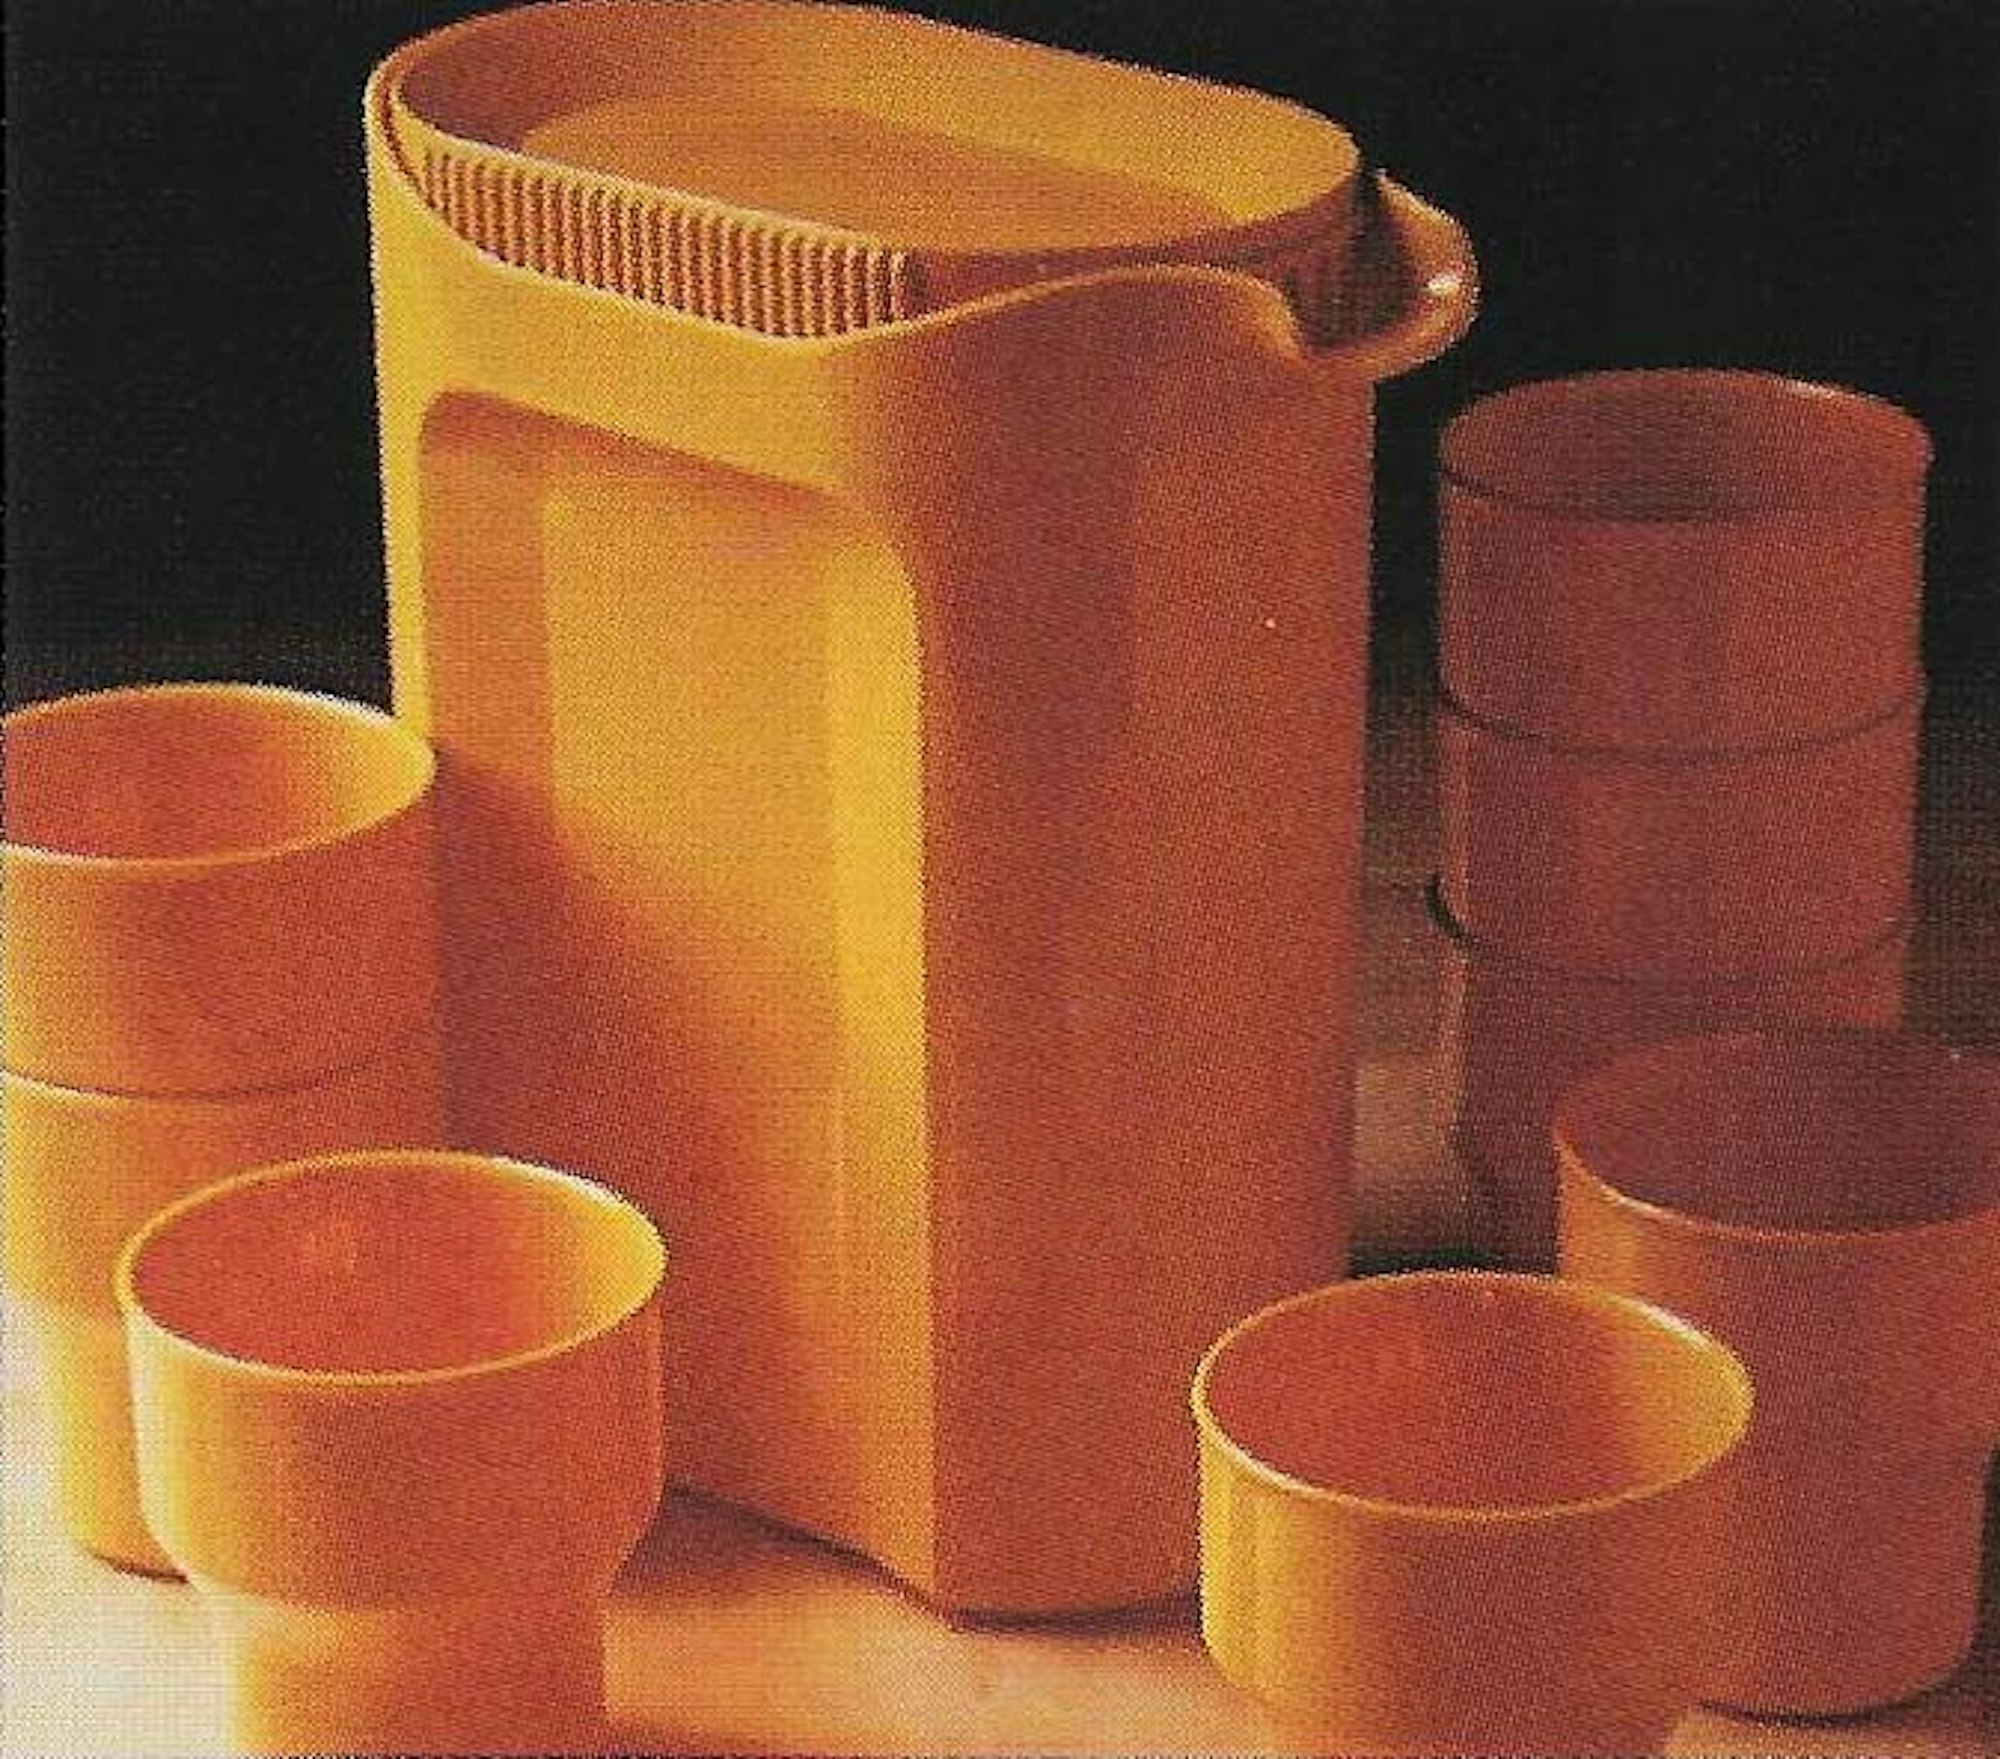 Goblets (1975), for Mepalservice (Nederland)